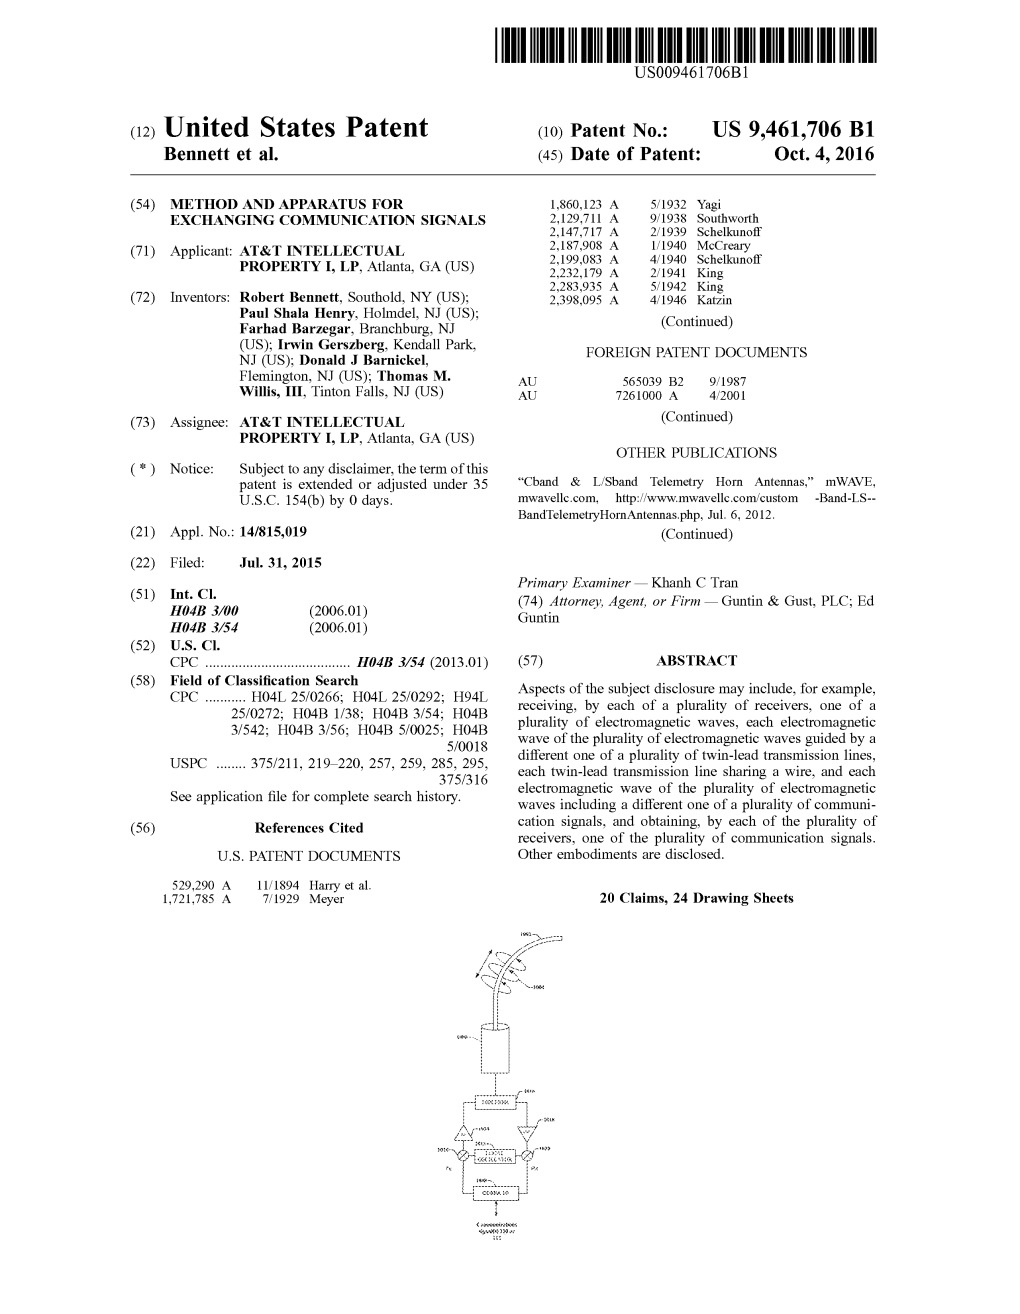 (12) United States Patent (10) Patent No.: US 9,461,706 B1 Bennett Et Al